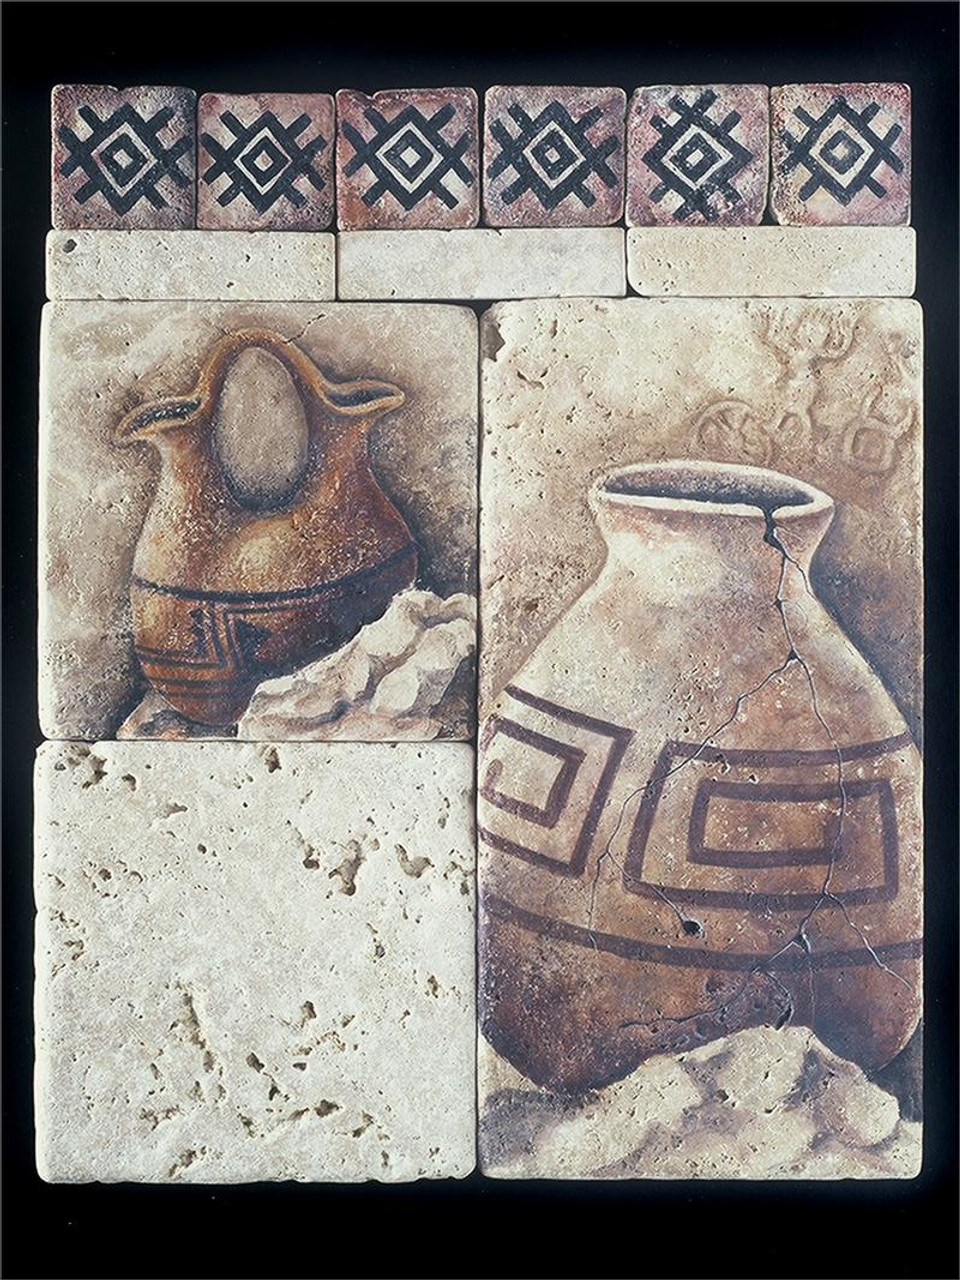 Wedding Pot/Cracked Pot Stone Tile - Sampler Display